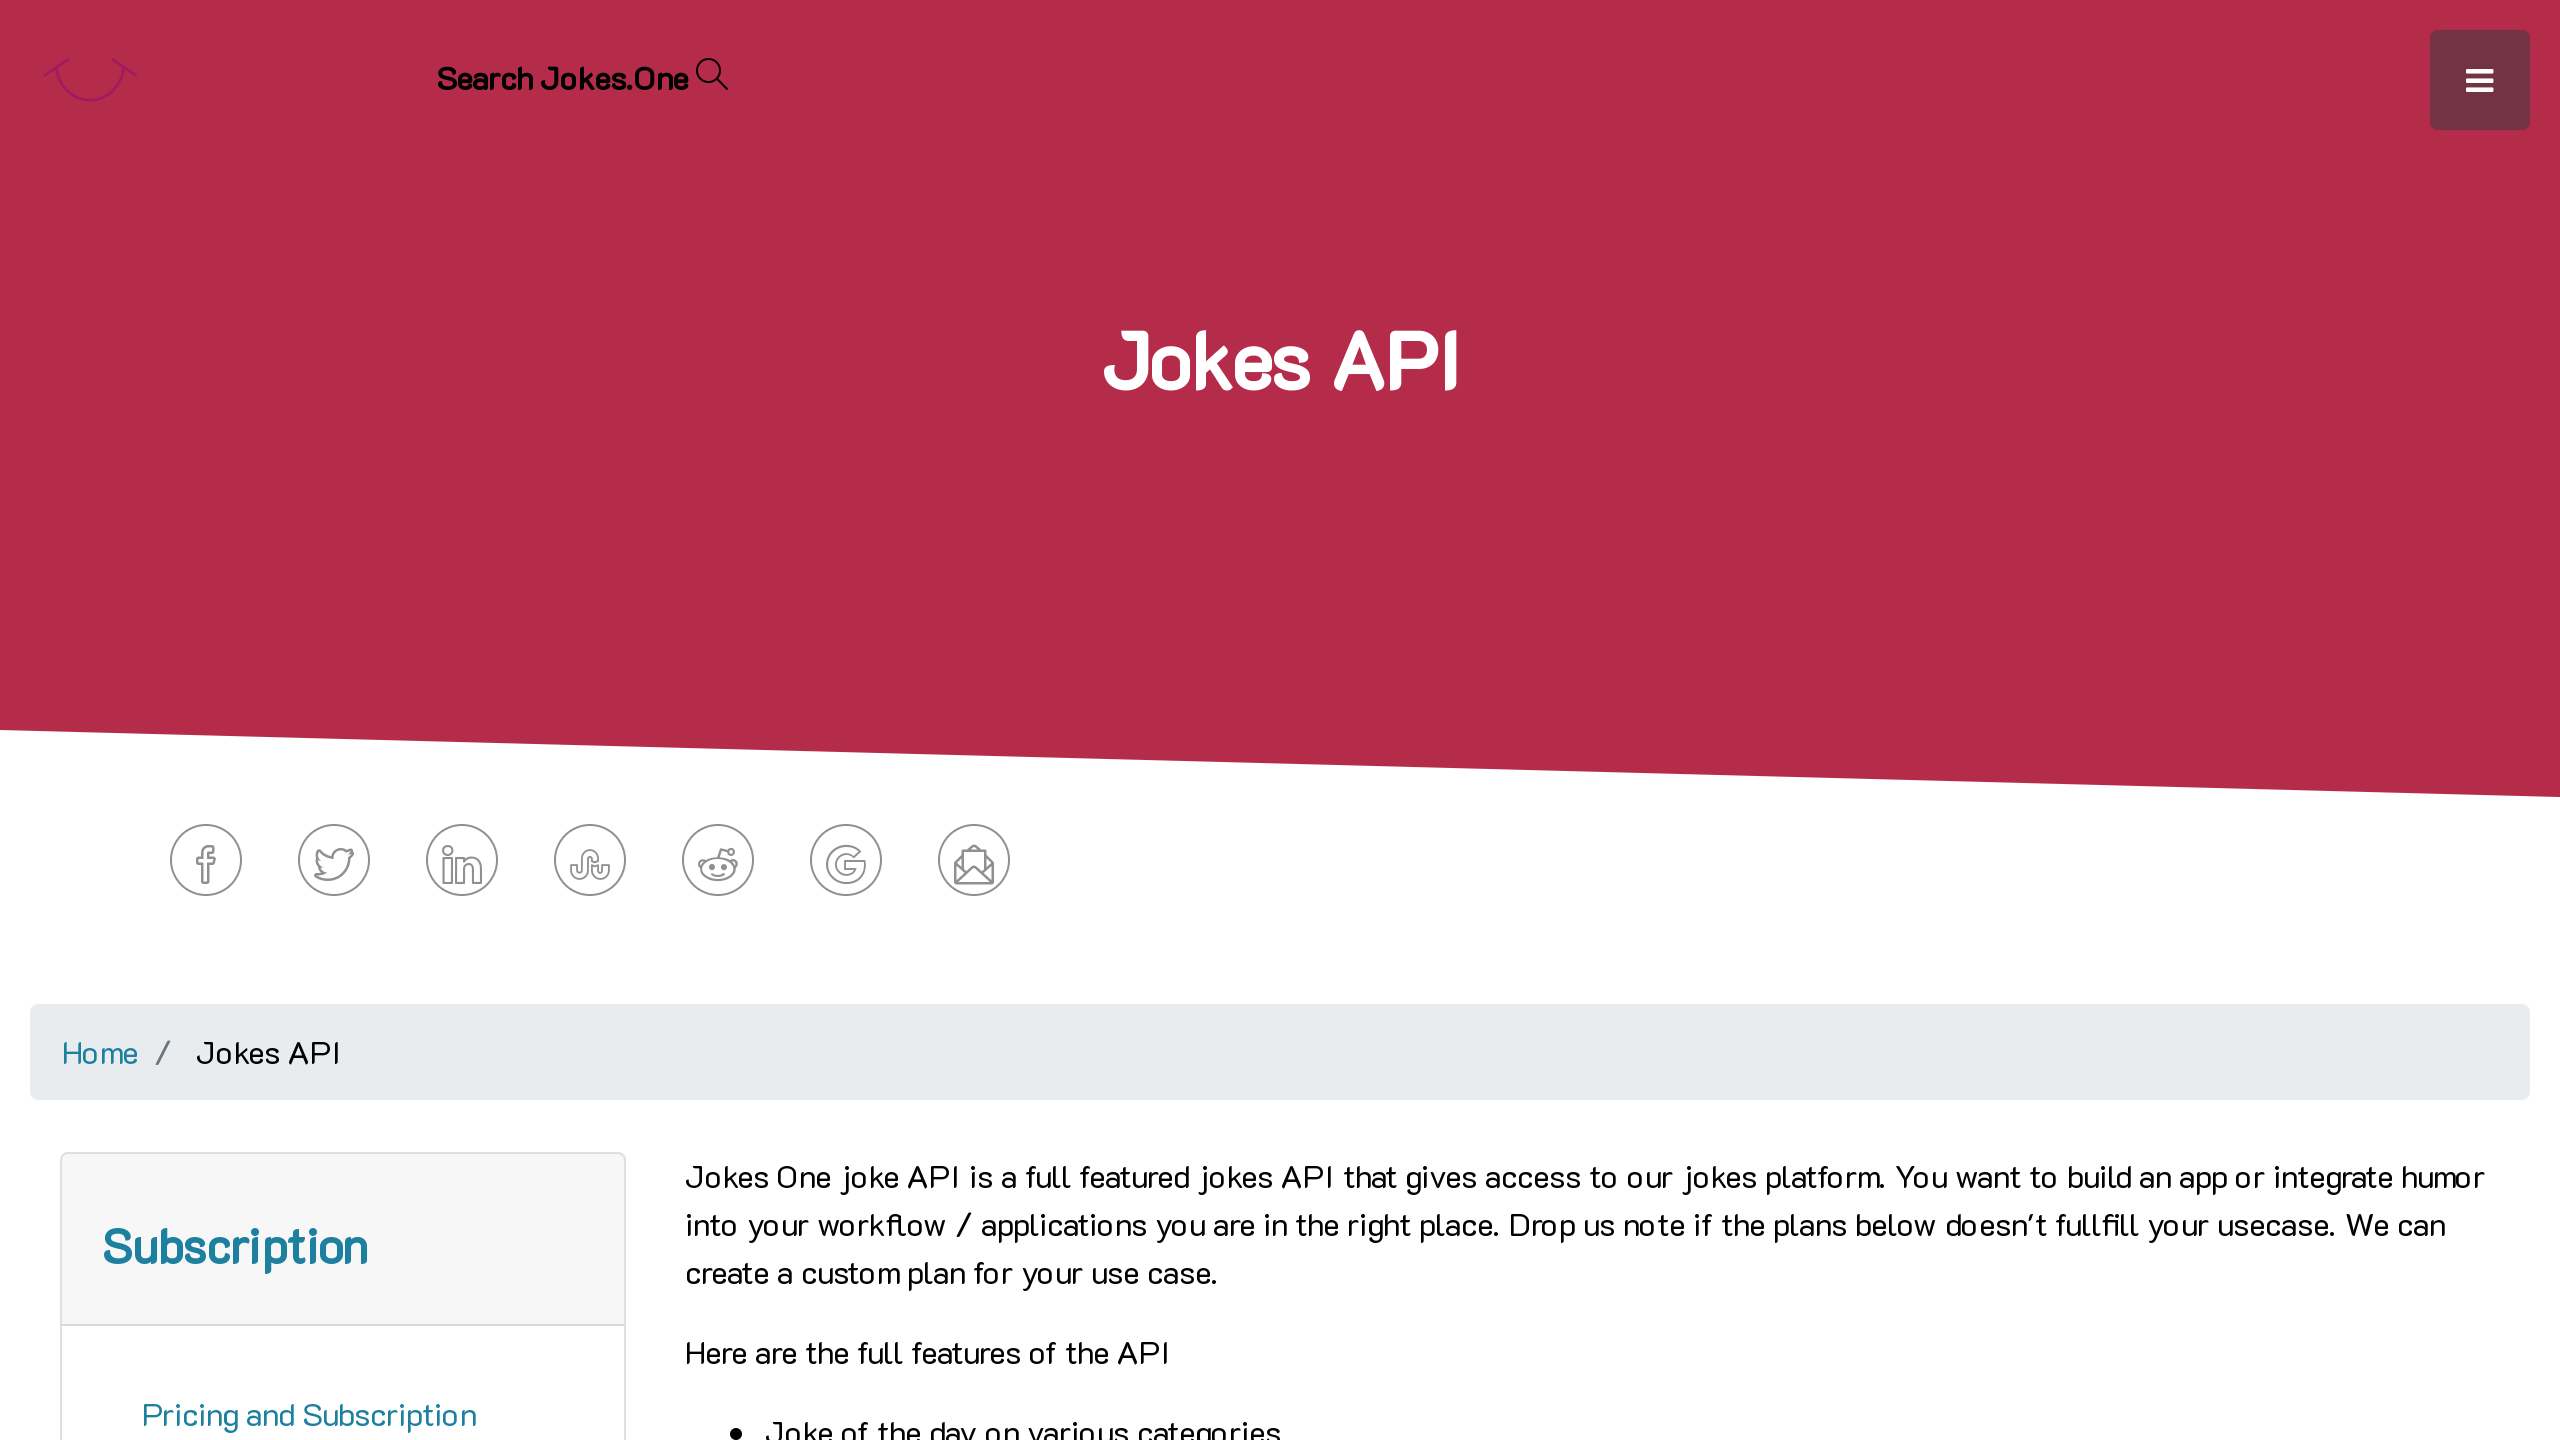 Jokes One's website screenshot